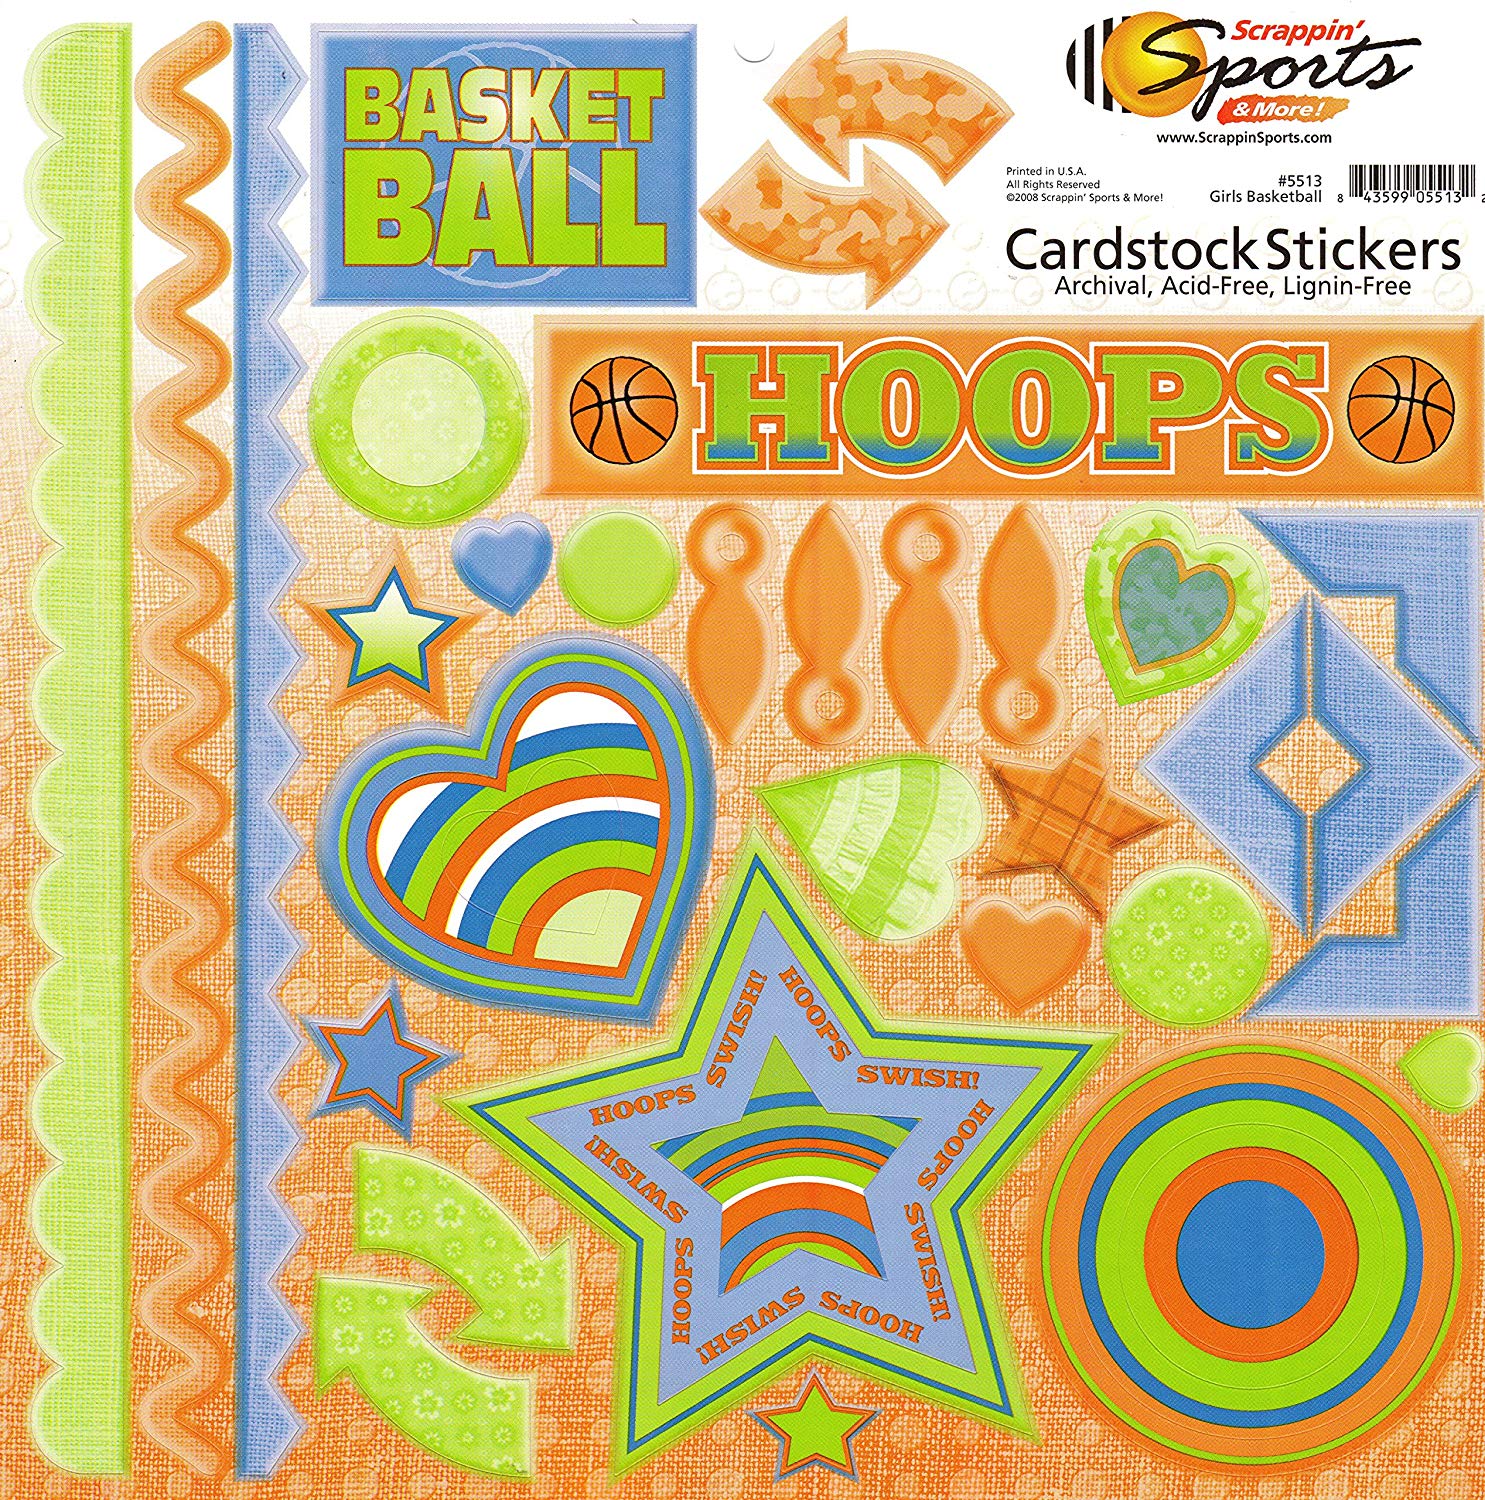 Girls Basketball Cardstock Stickers